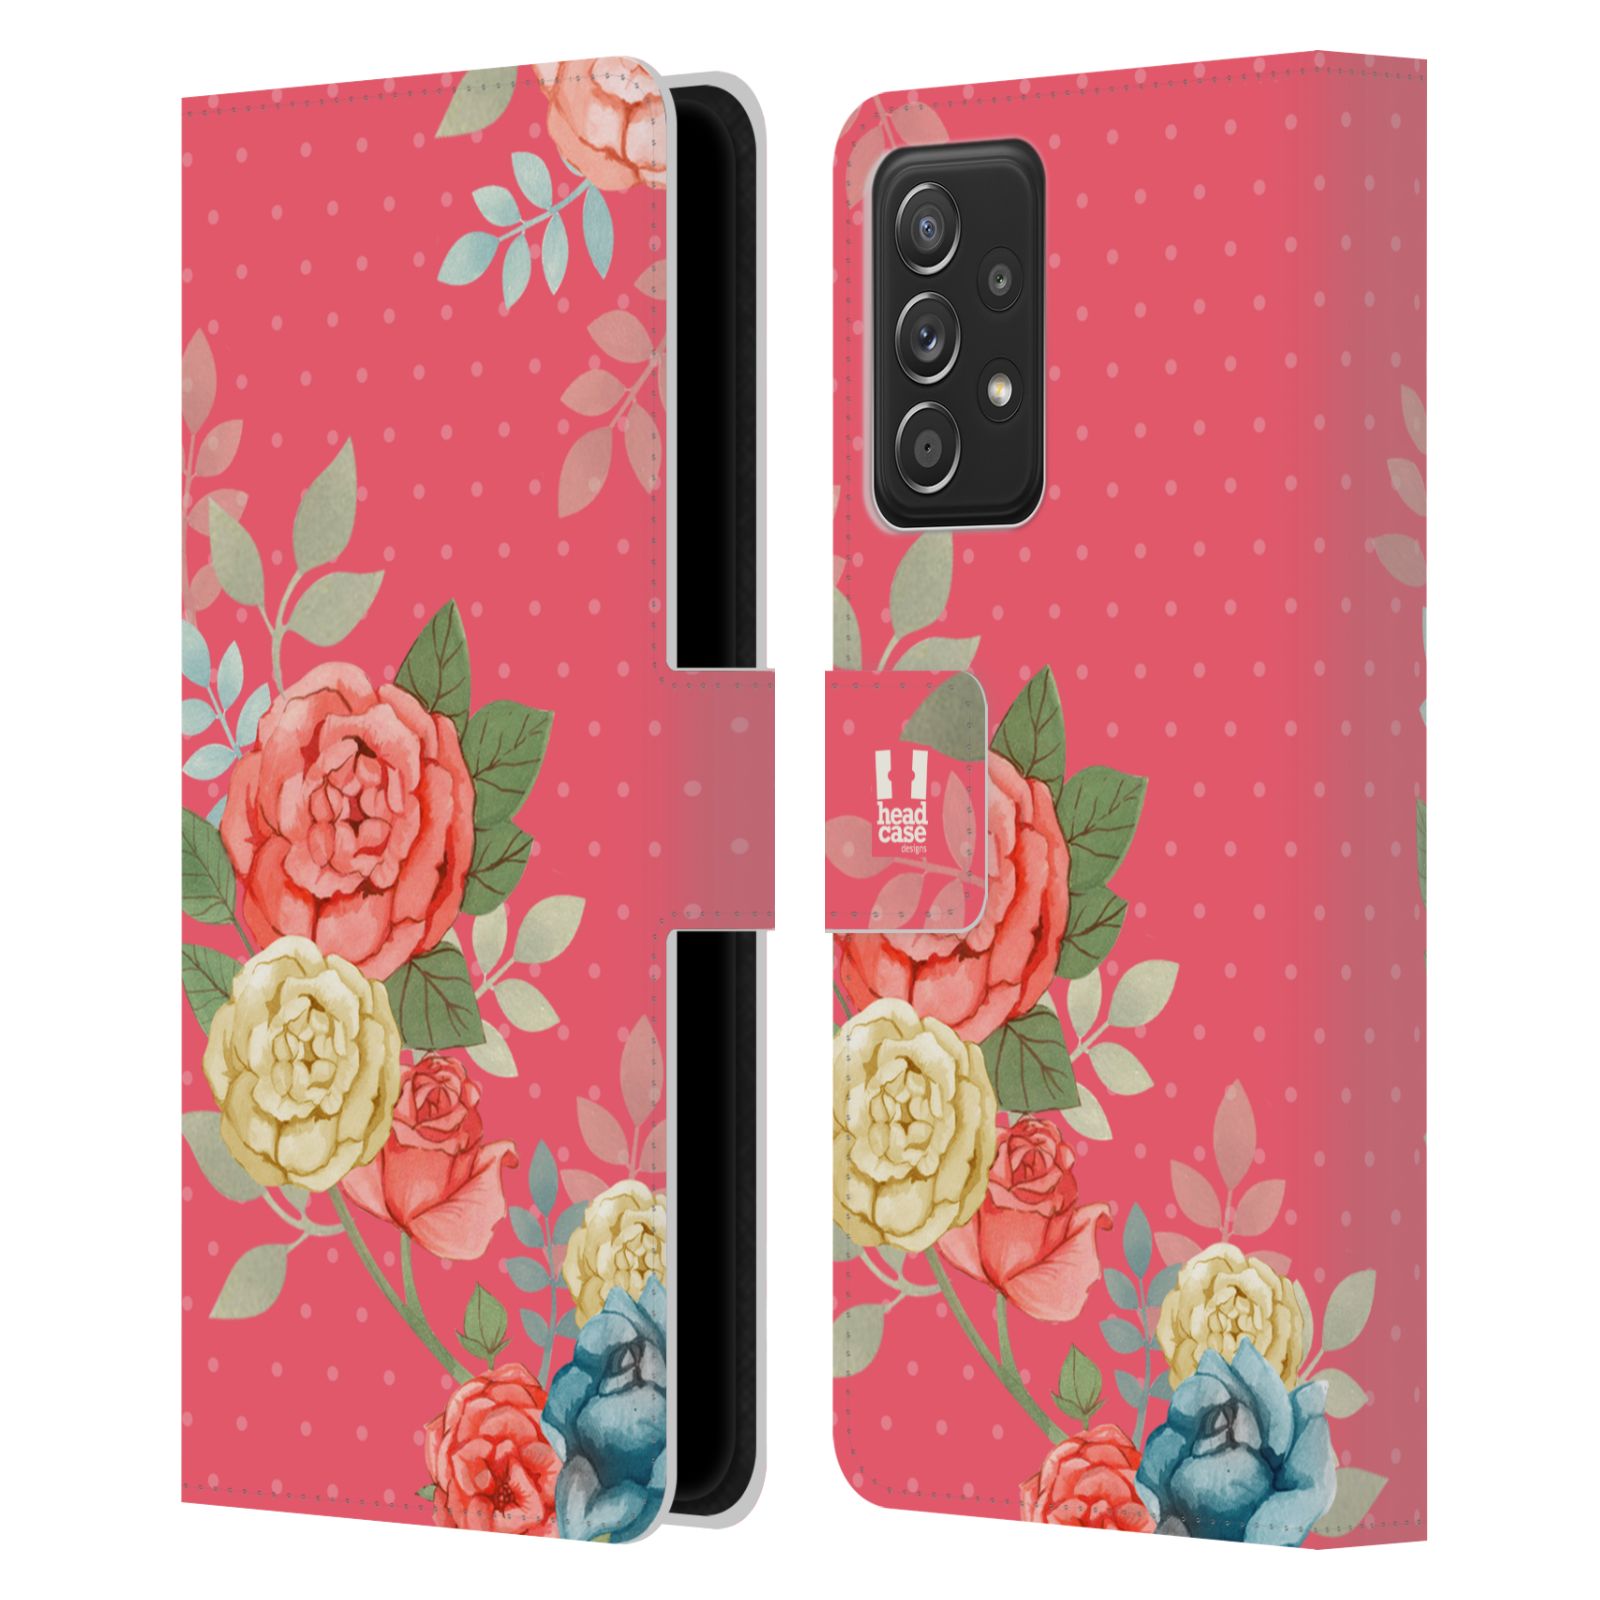 Pouzdro HEAD CASE na mobil Samsung Galaxy A52 / A52 5G / A52s 5G romantické květy růžová